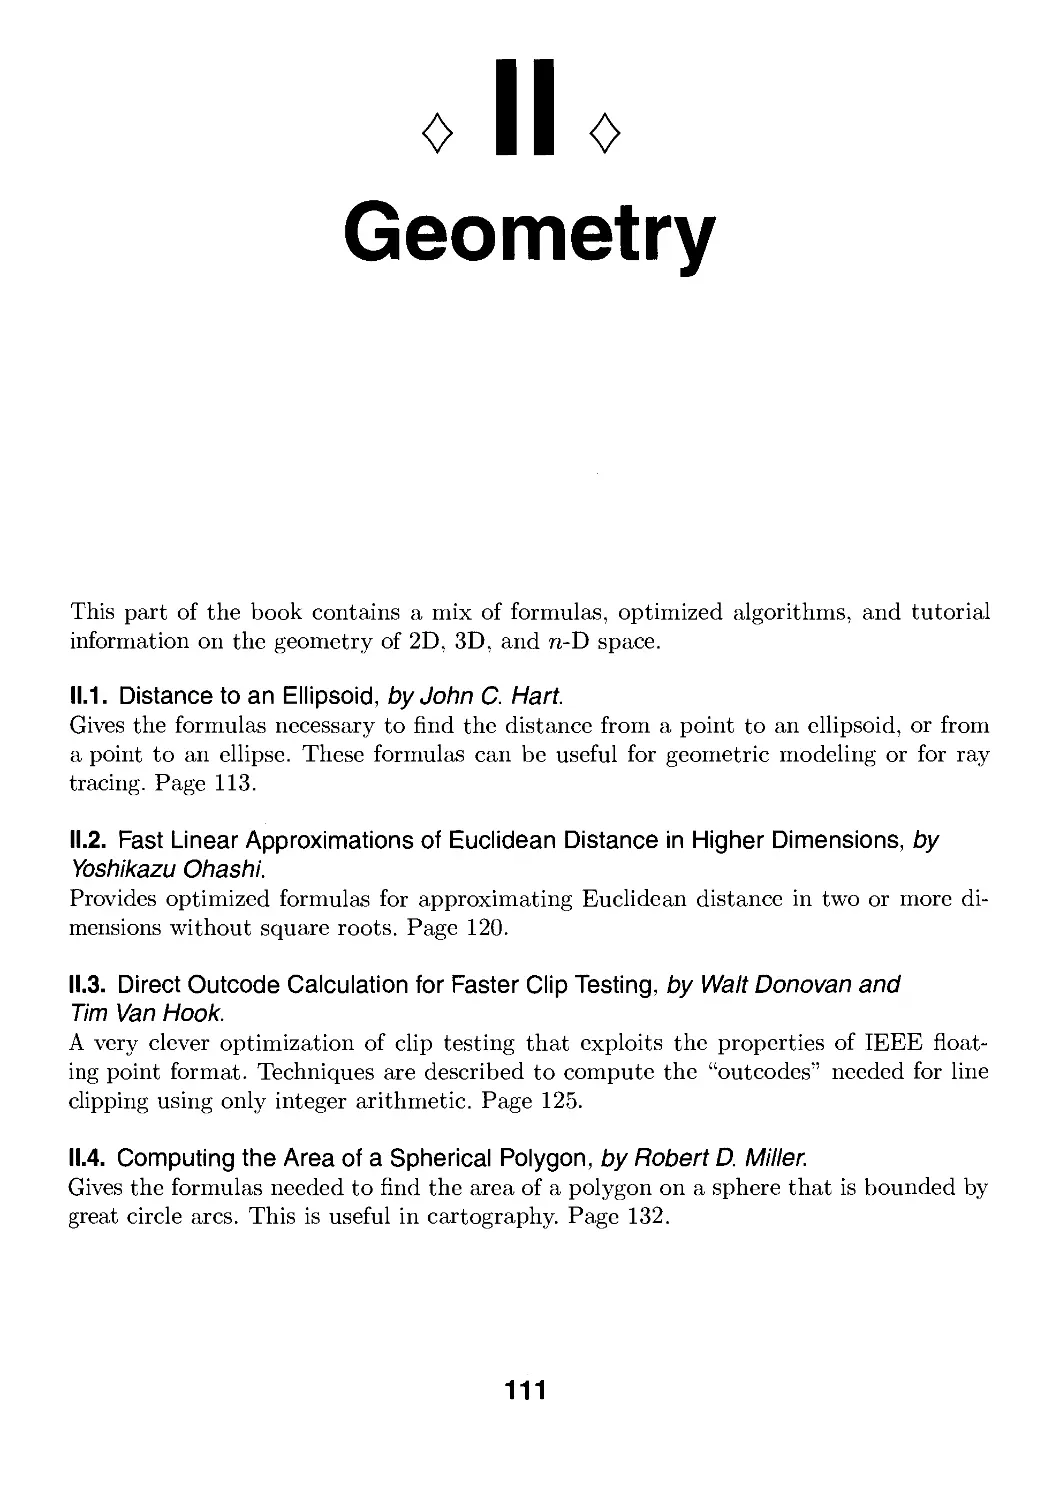 II. Geometry